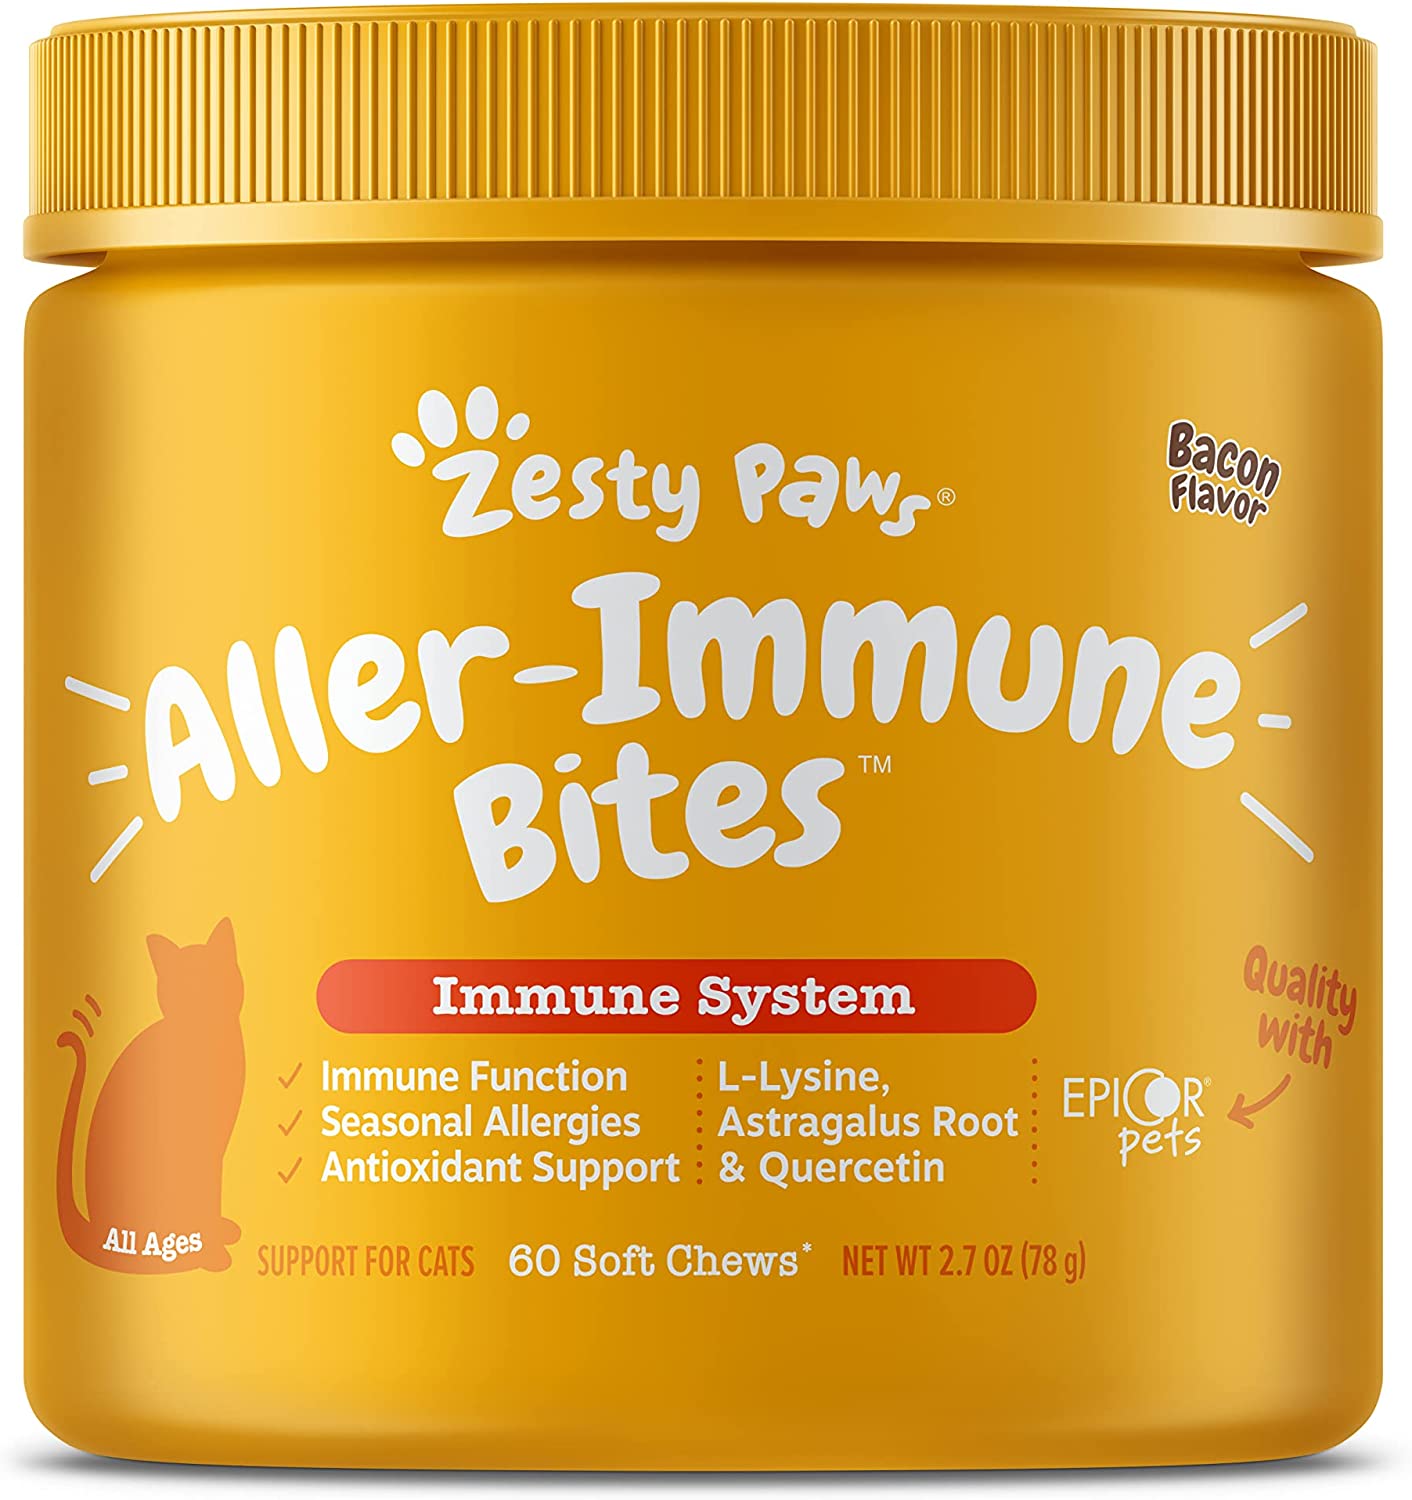 Zesty Paws Cat Aller-Immune Bites